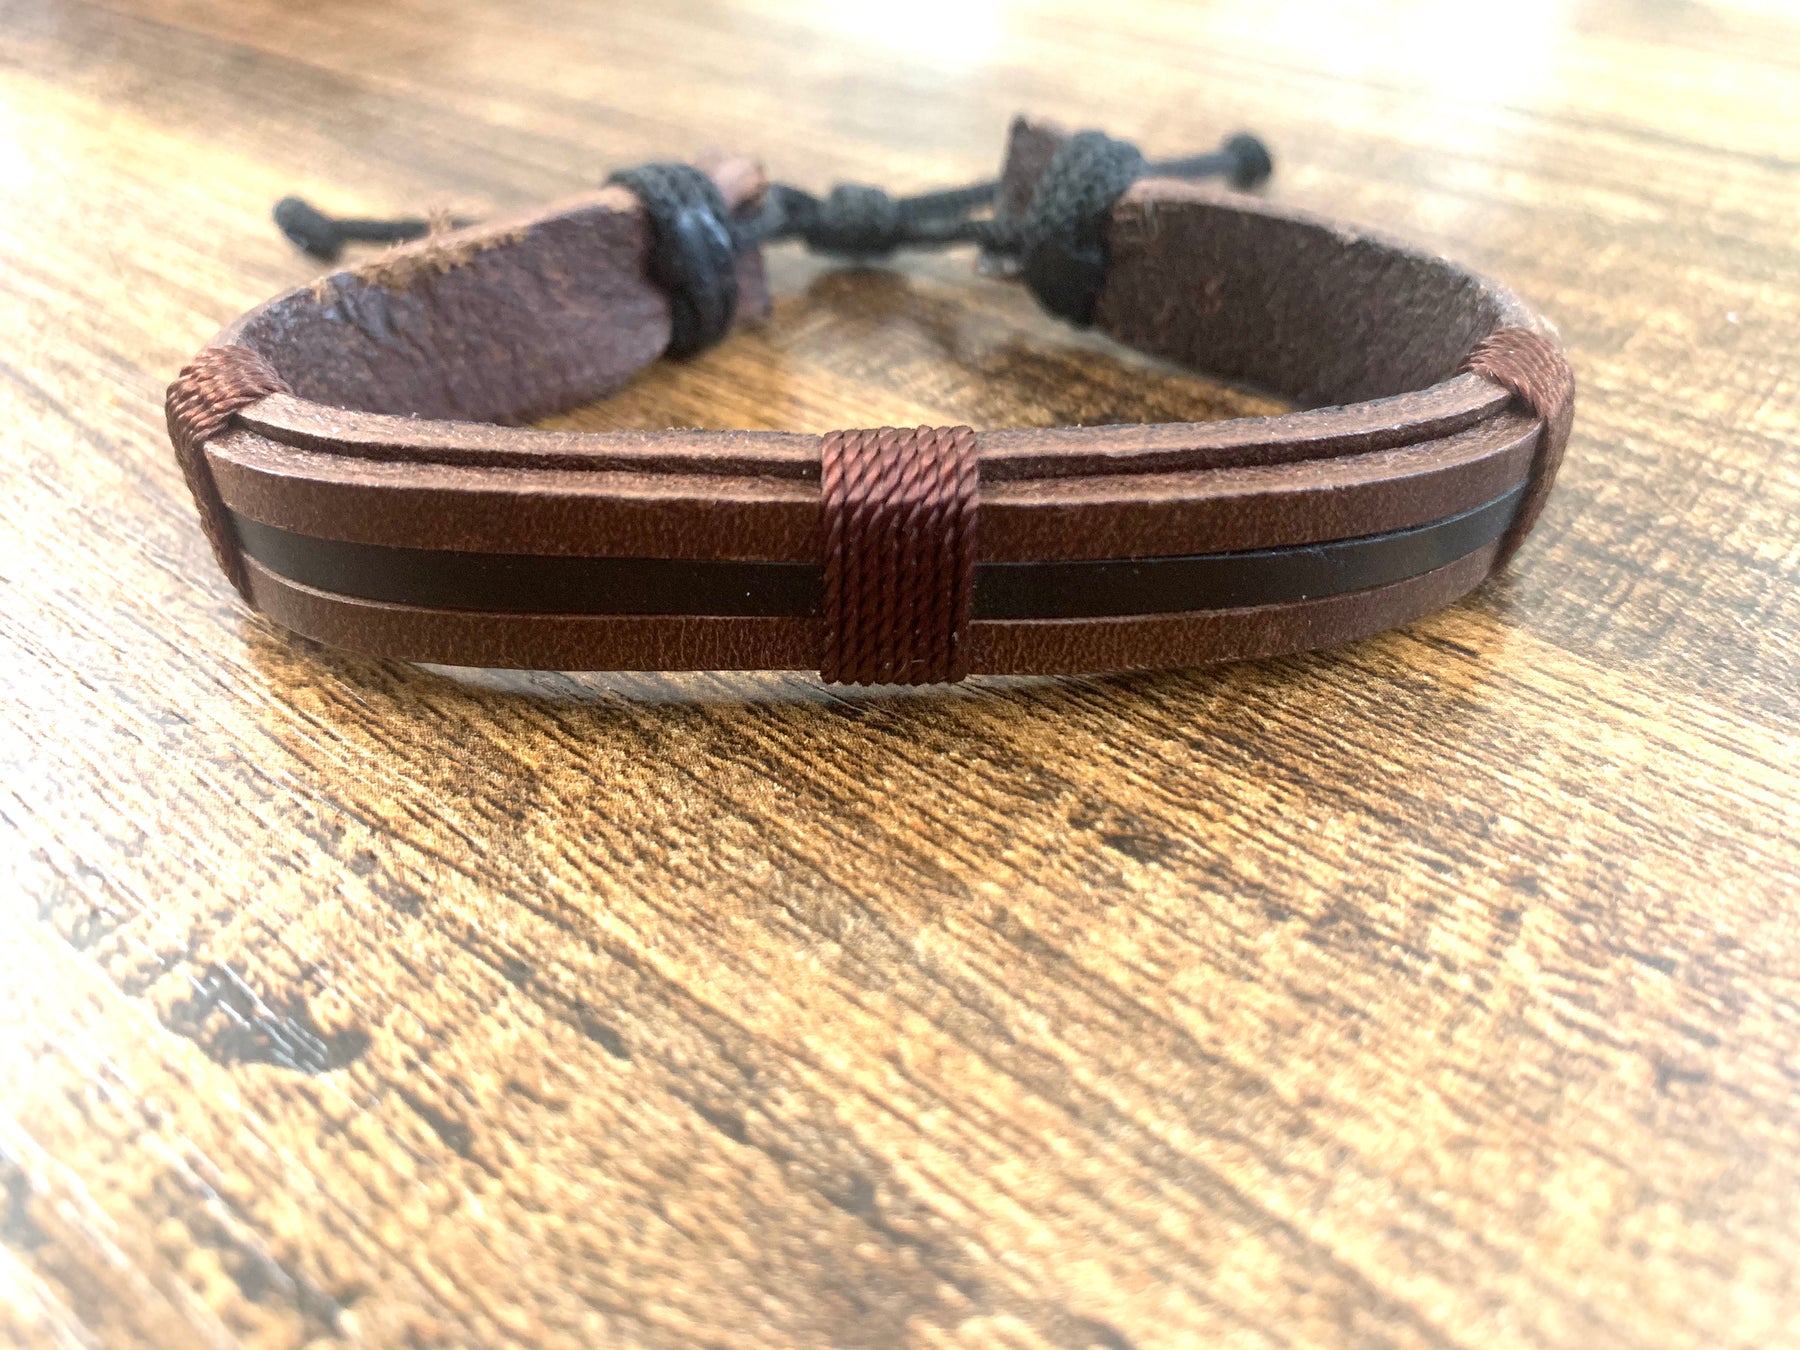 brown leather adjustable